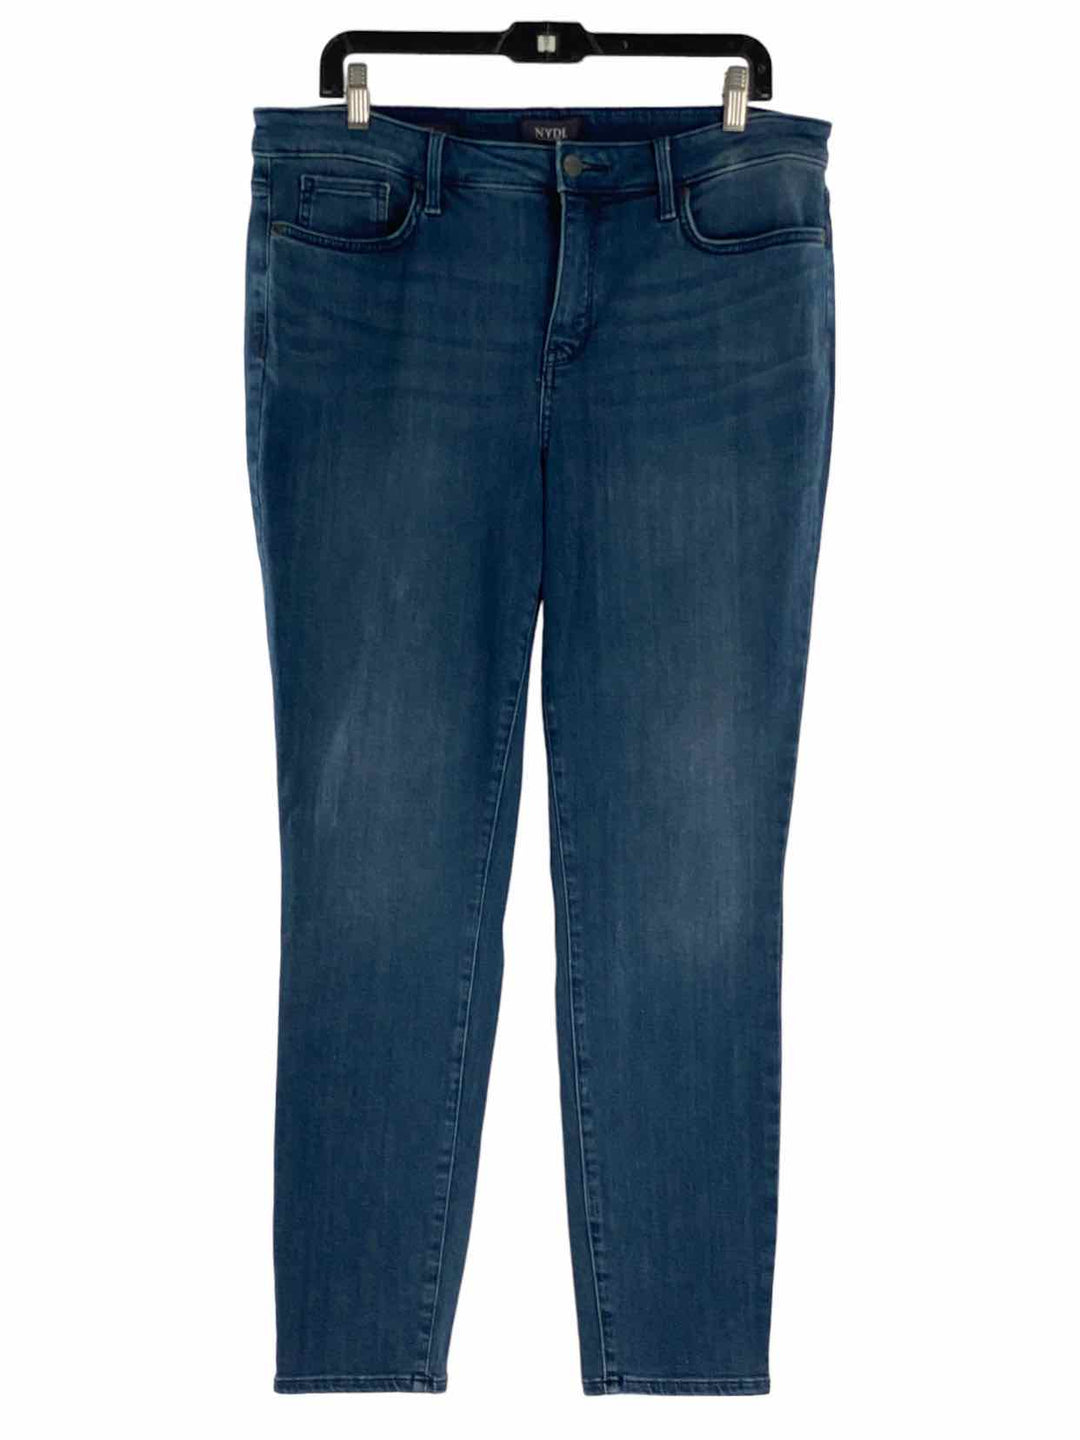 NYDJ Size 14 Dark Wash Jeans